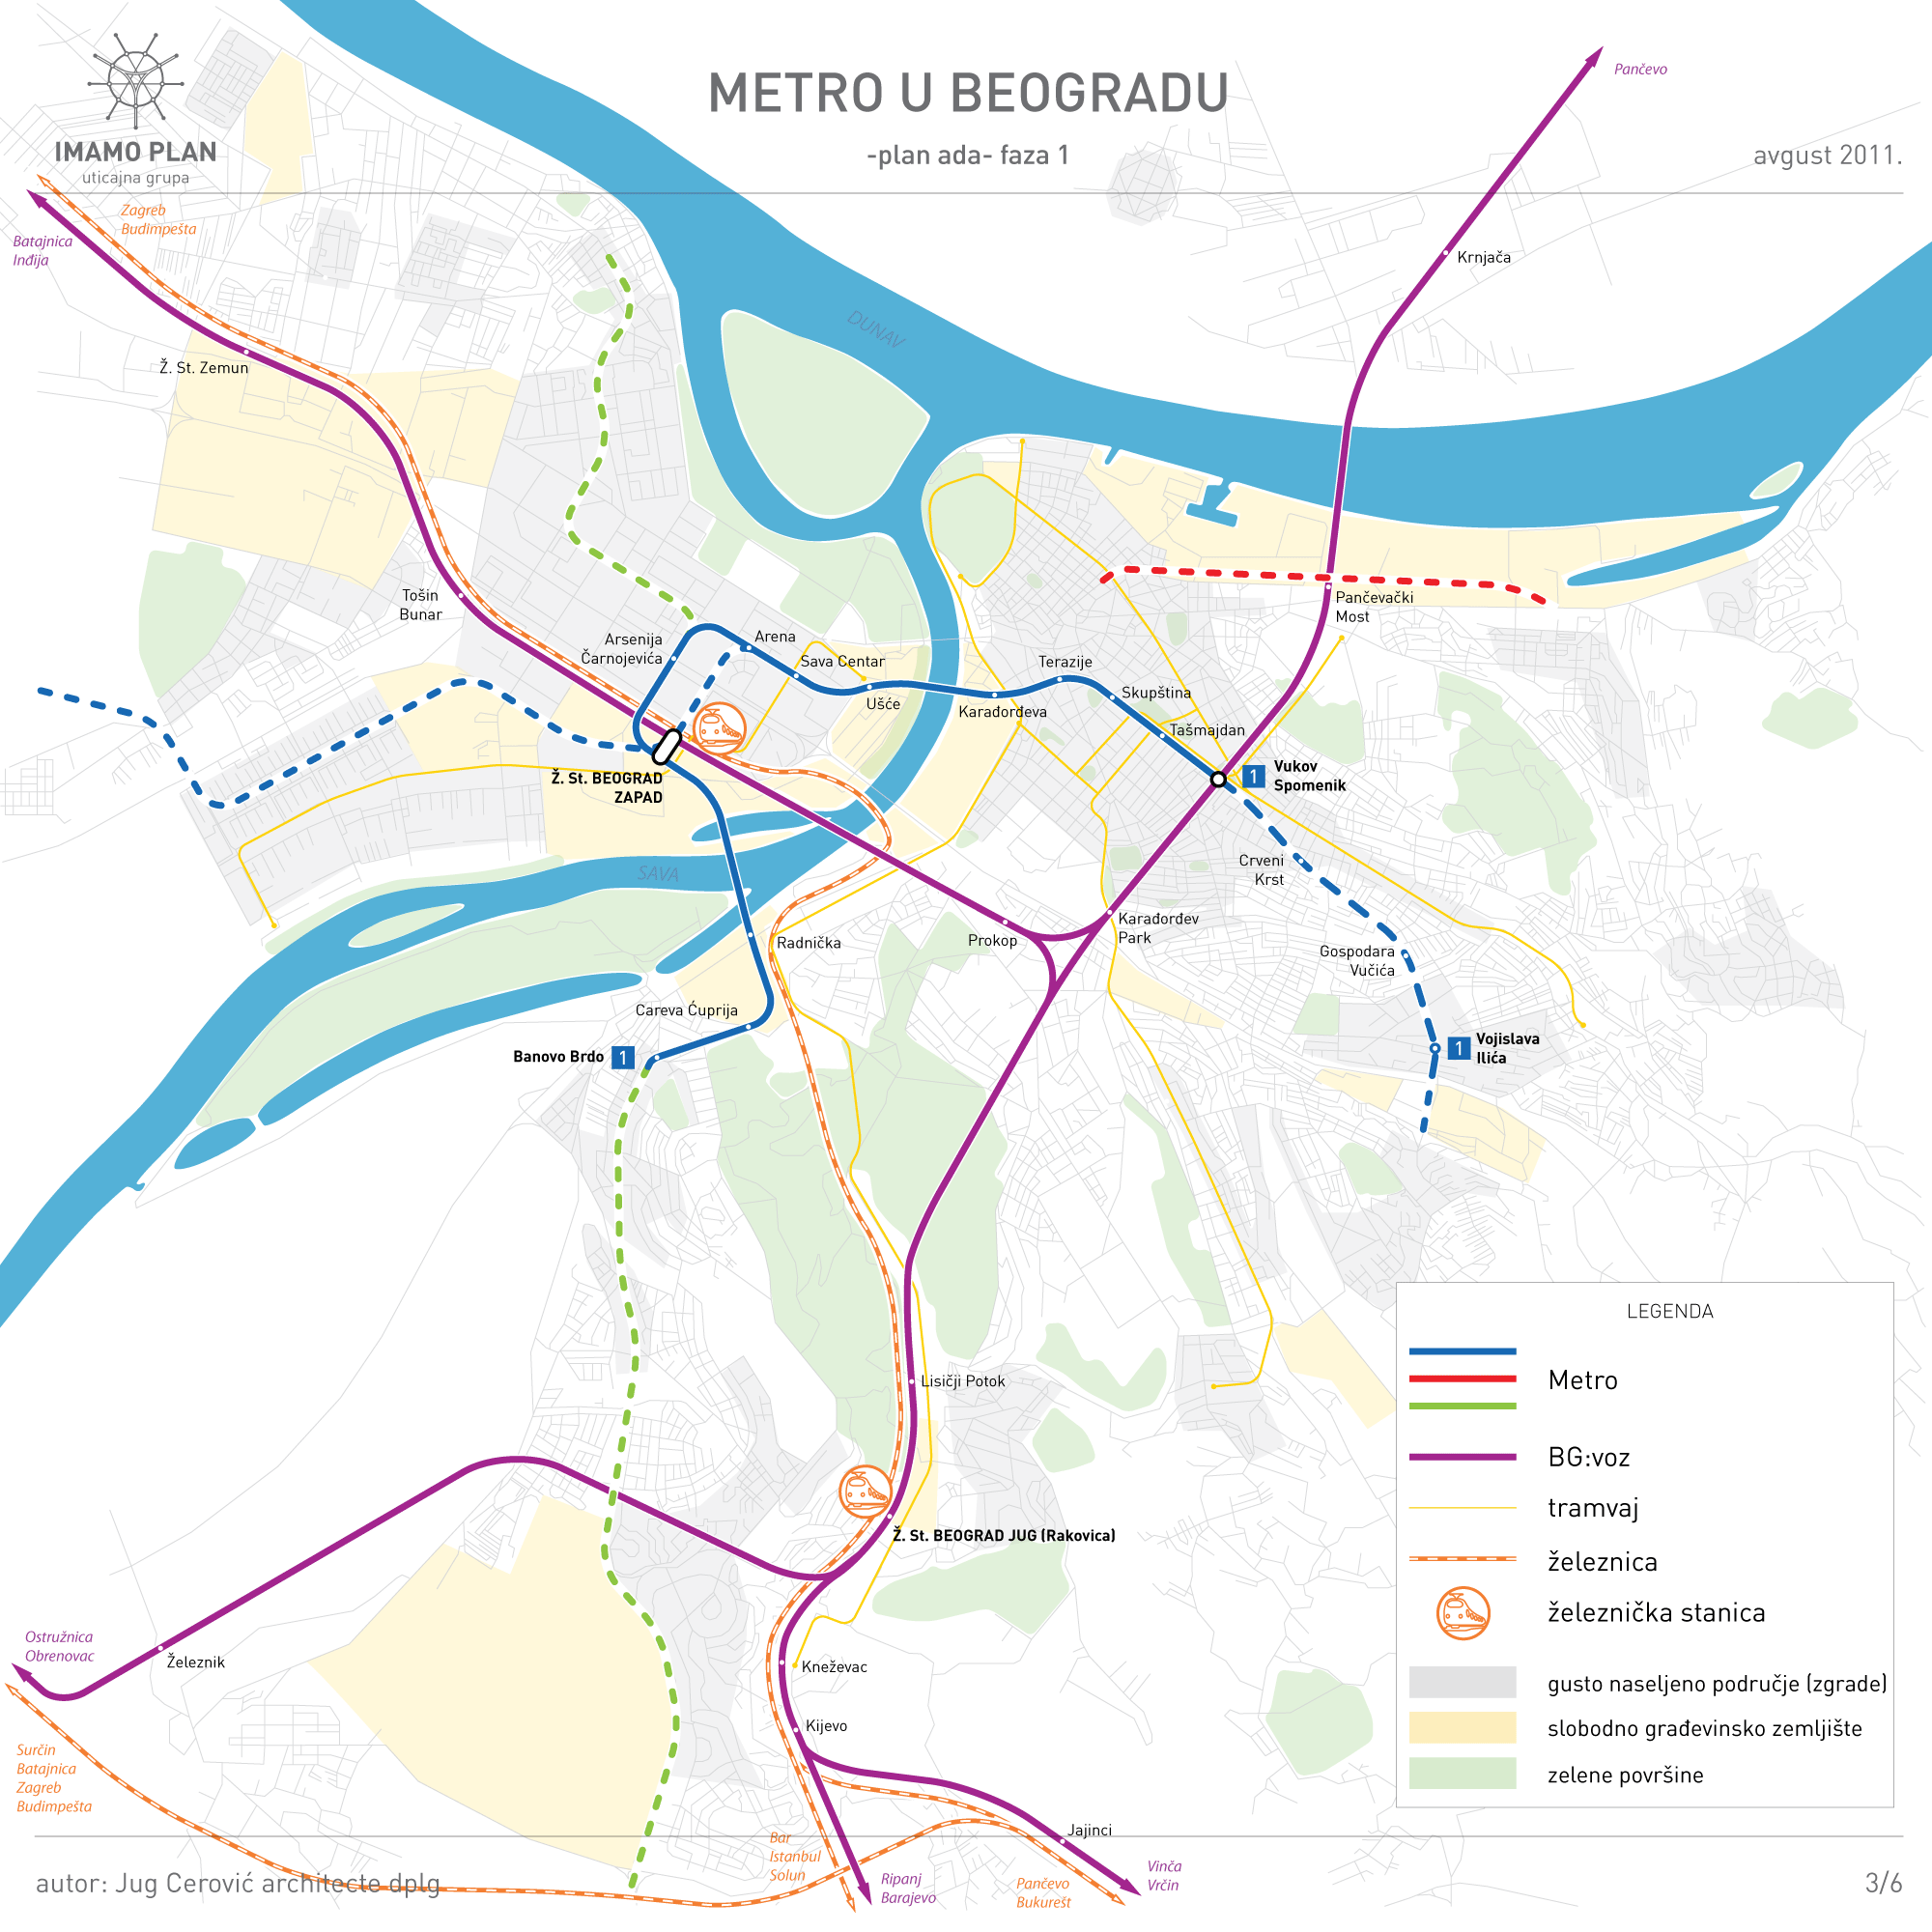 51_bgd-metro-ada-faza-1.png